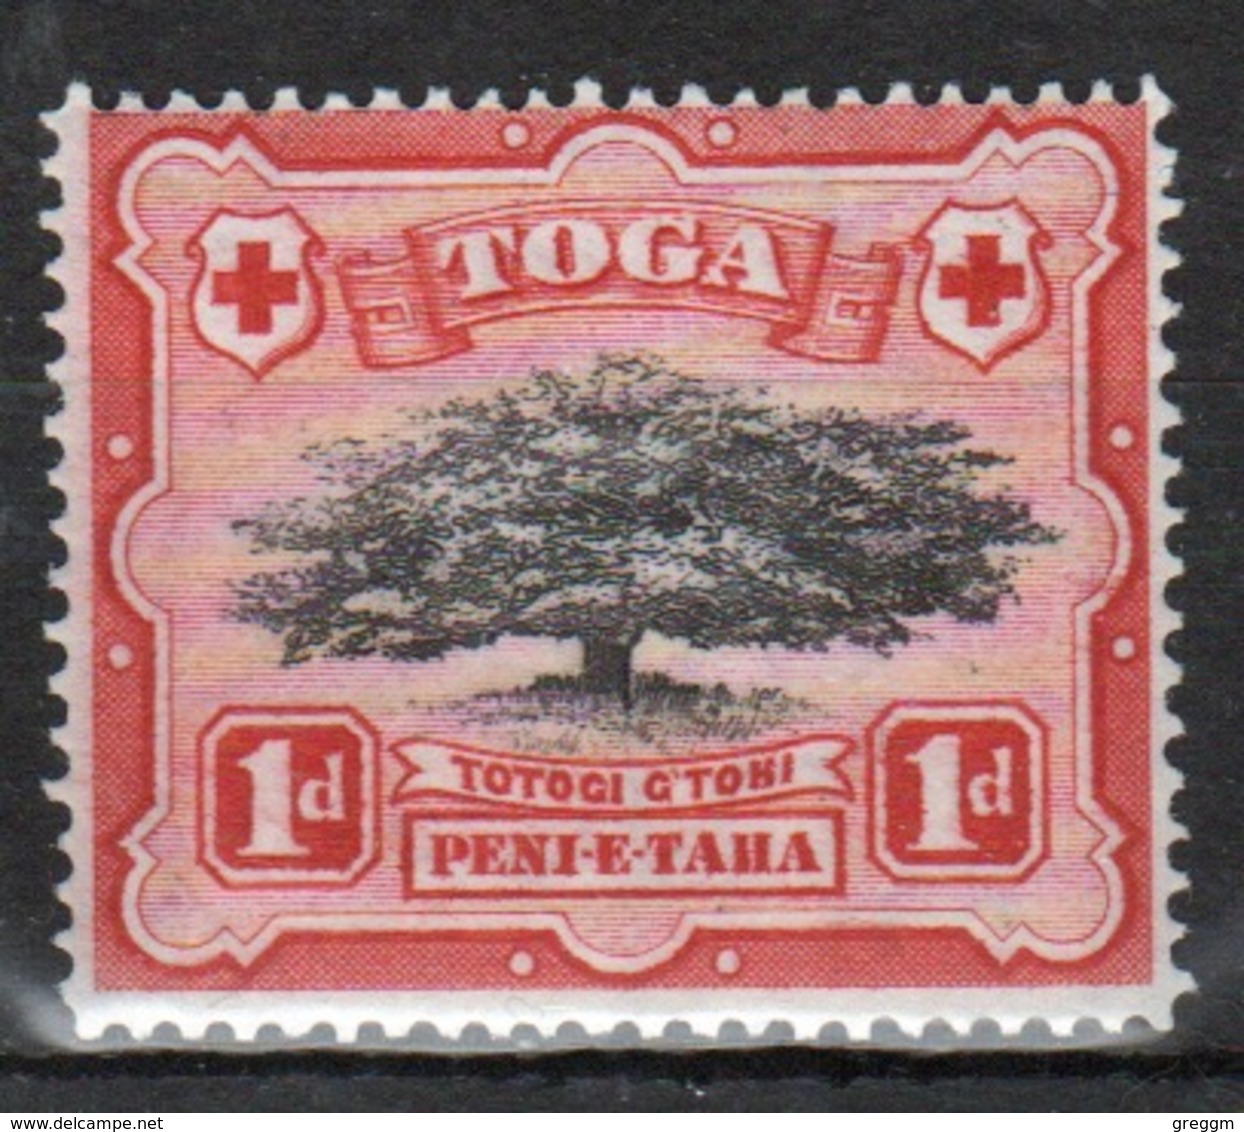 Tonga 1942 Single 1d Stamp From The Definitive Set. - Tonga (...-1970)